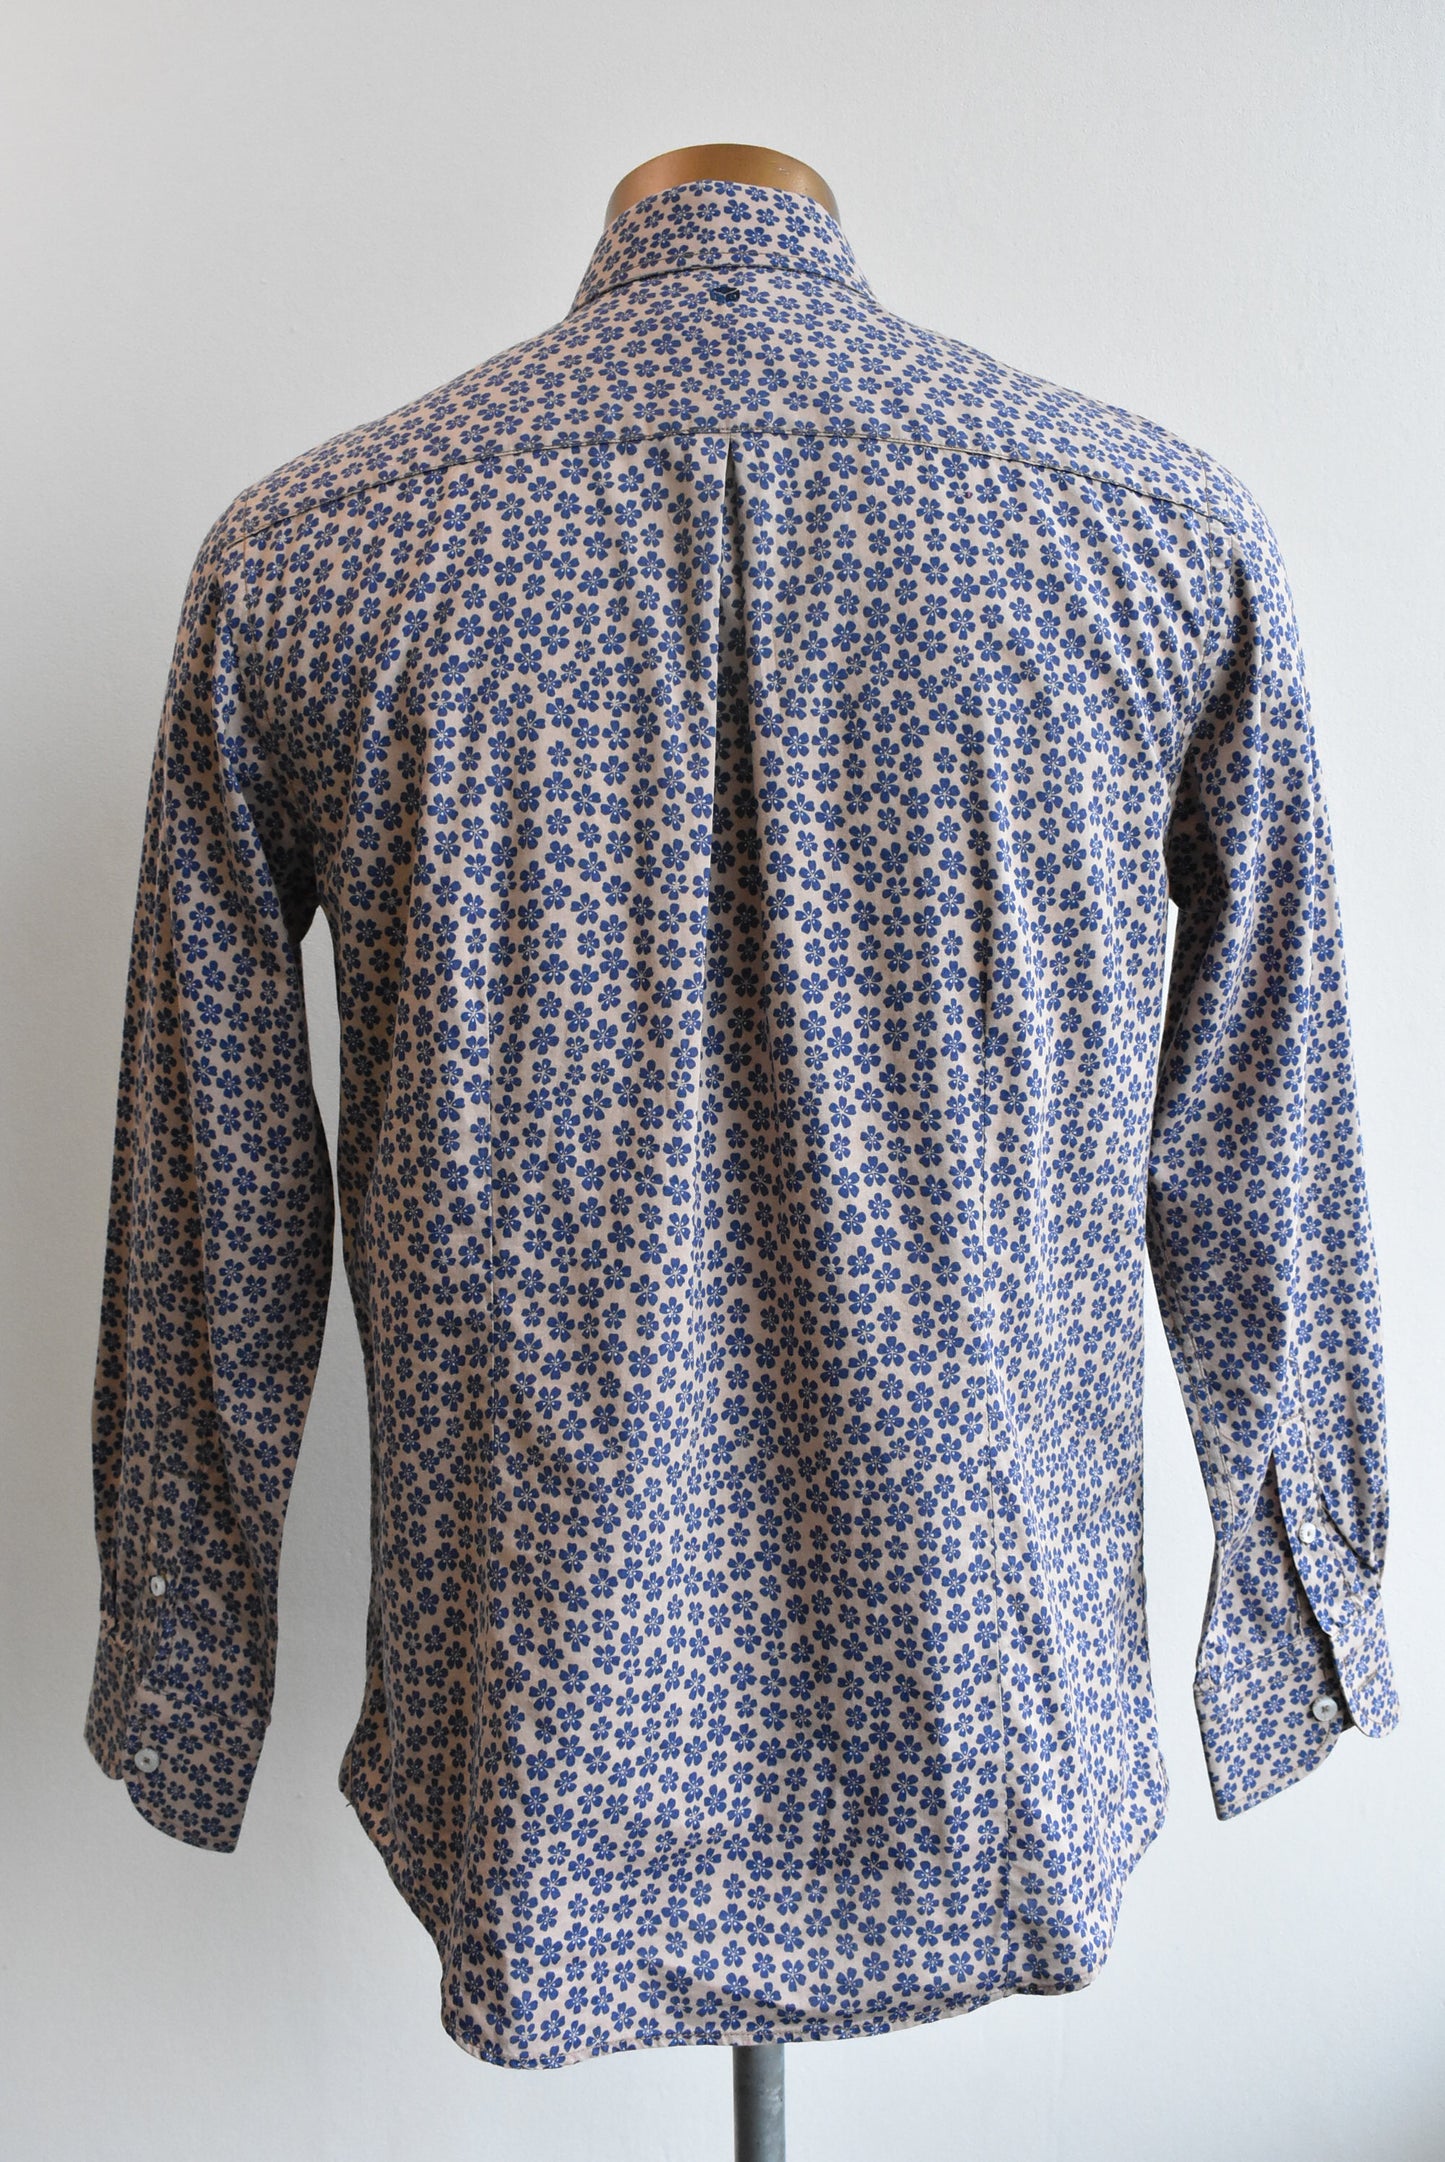 LFO floral printed mens shirt, size medium